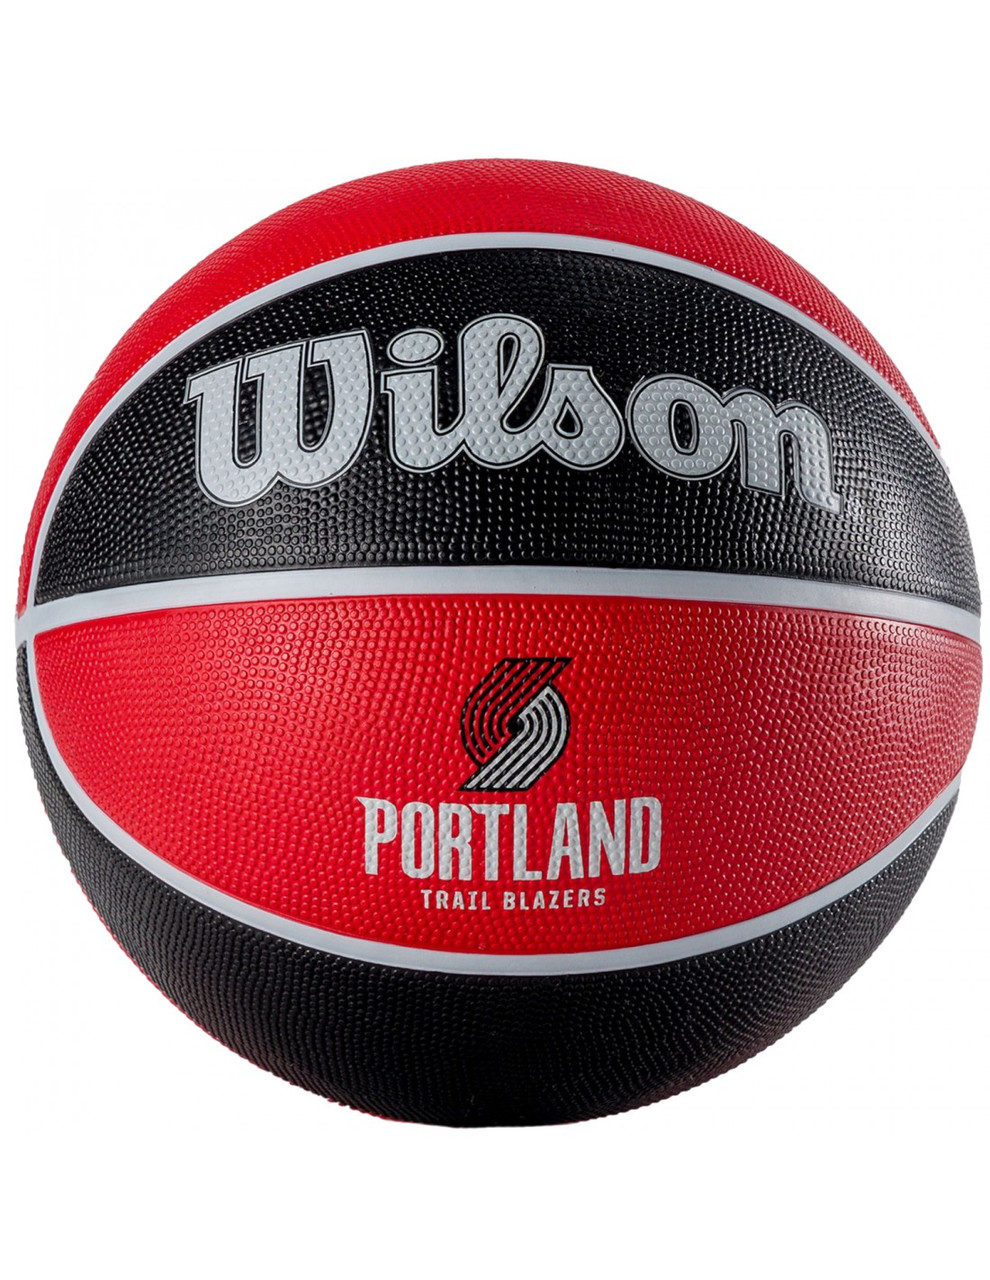 Мяч баскетбольный Wilson NBA Tribute Portland Trail Blazers